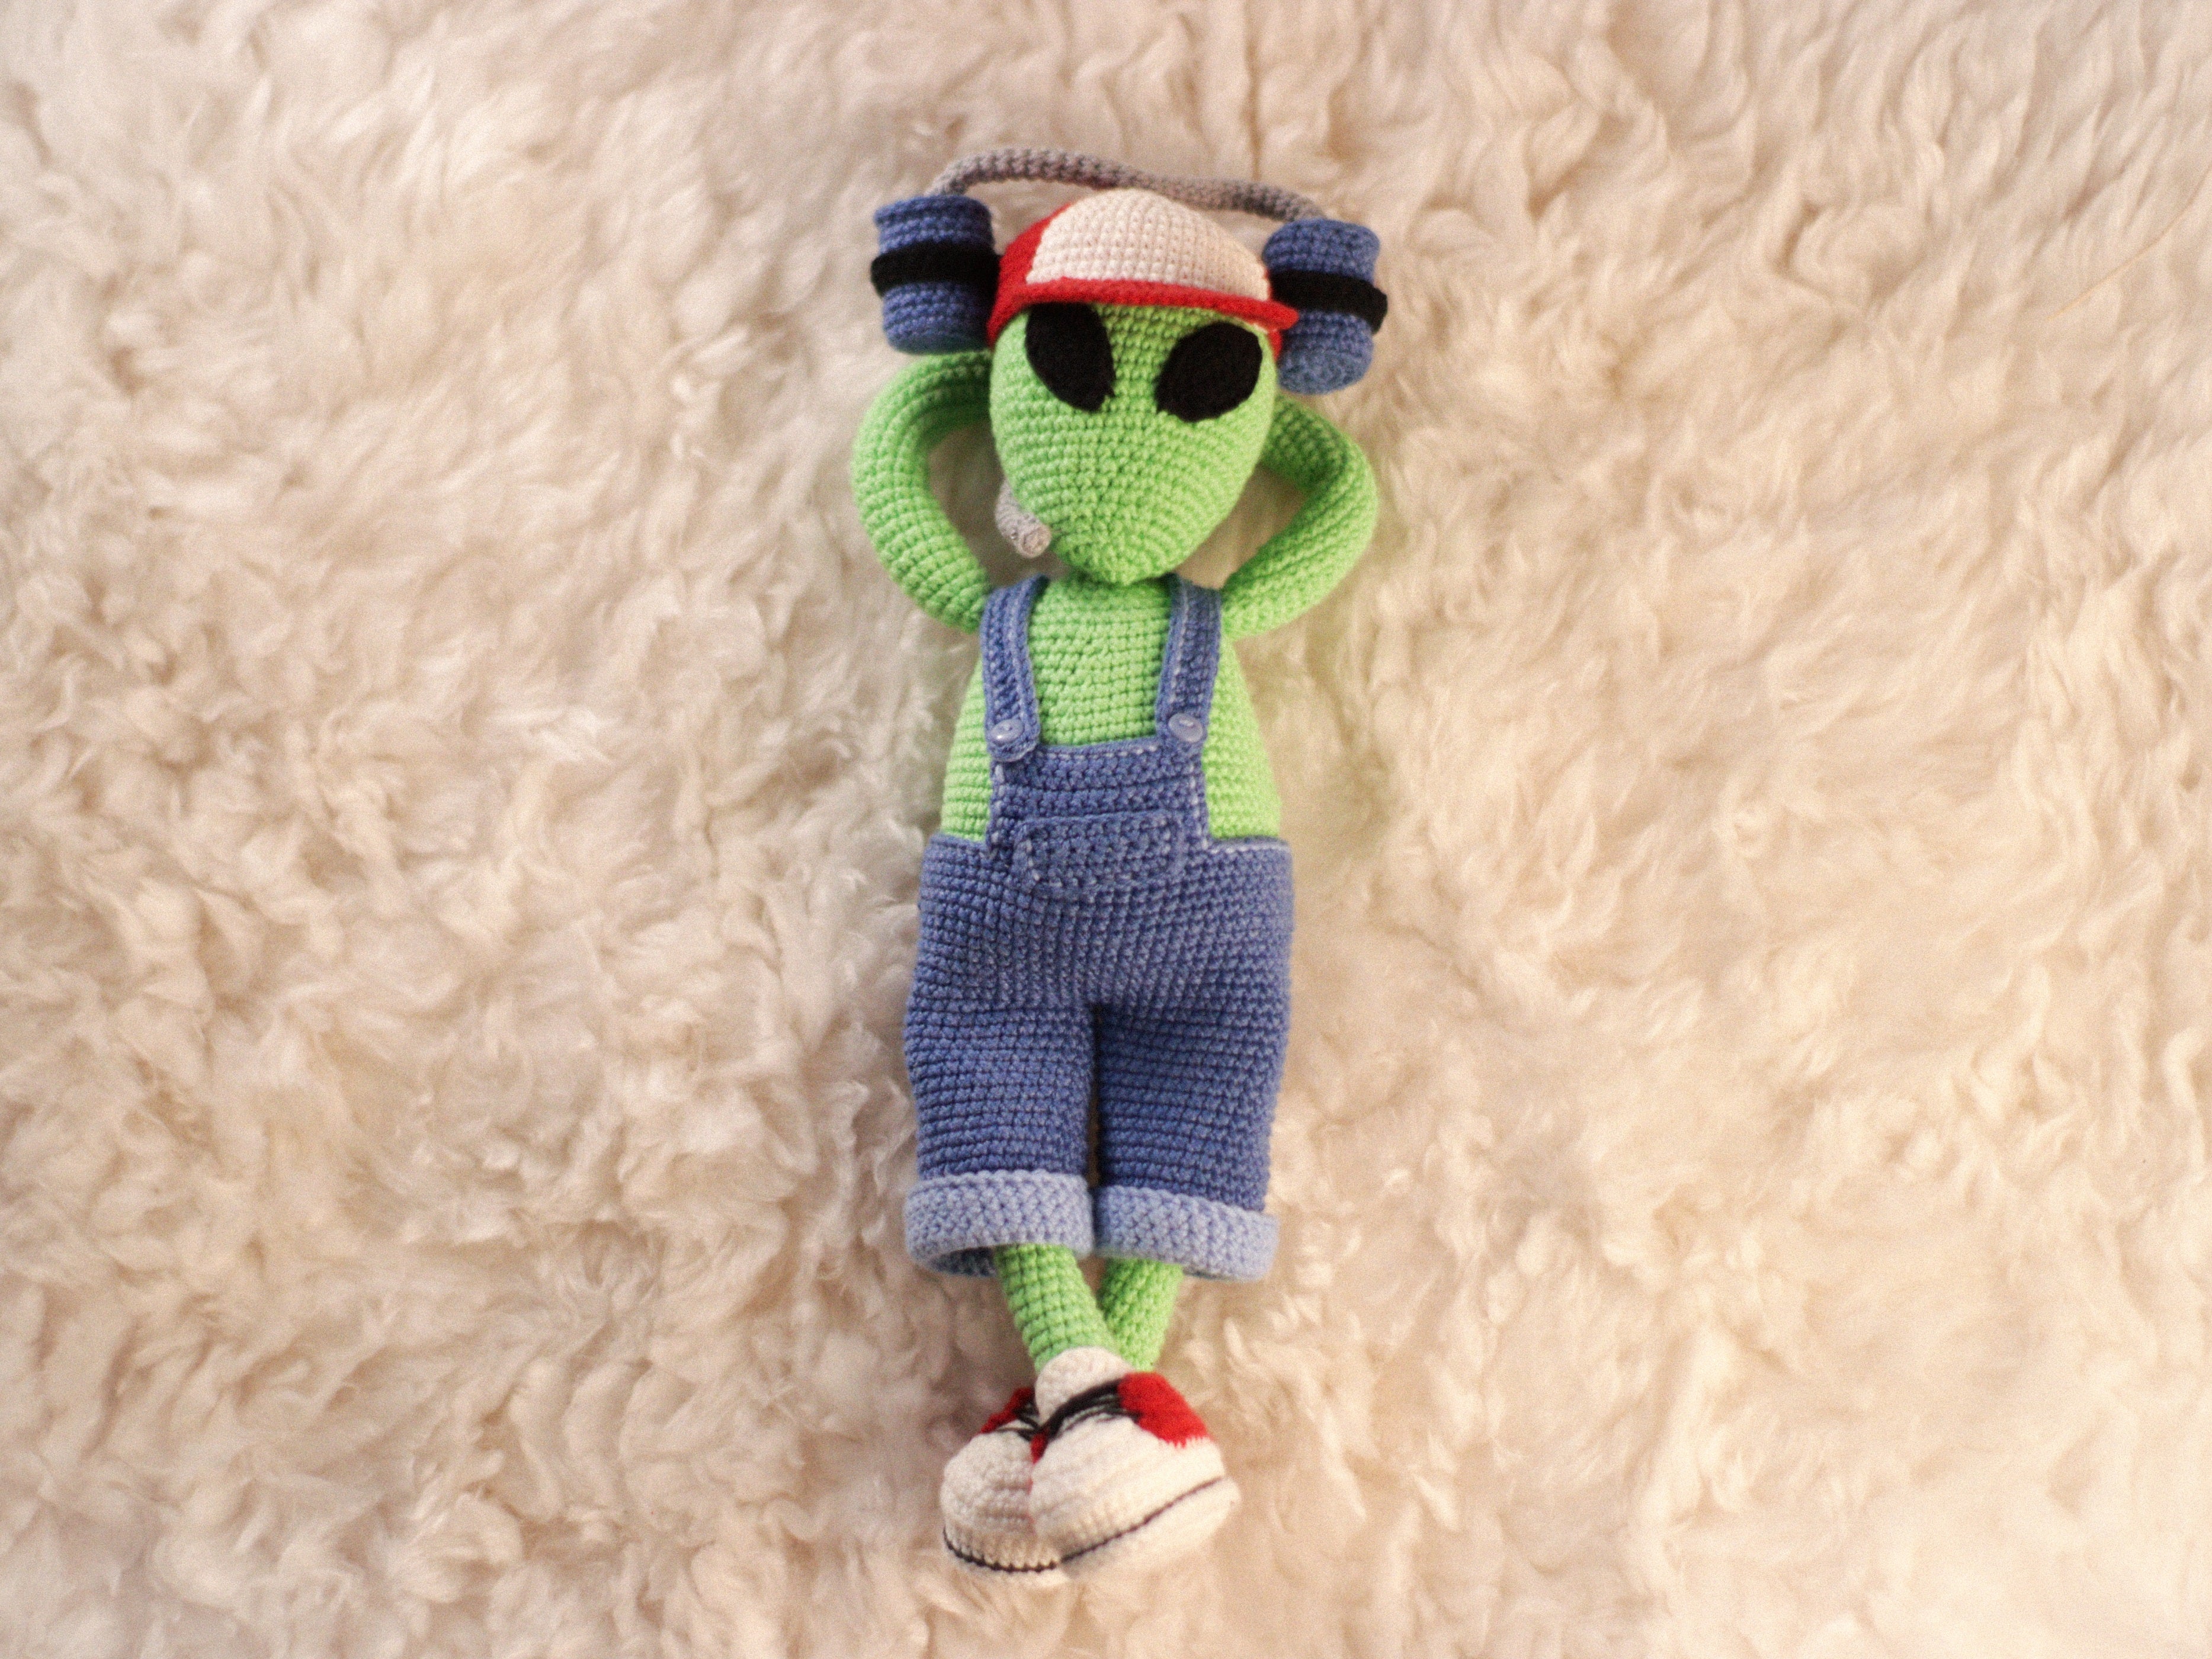 Crochet Pattern Chilling Alien with beer hat - Galactic DIY Amigurumi Toy Tutorial / Instant Download